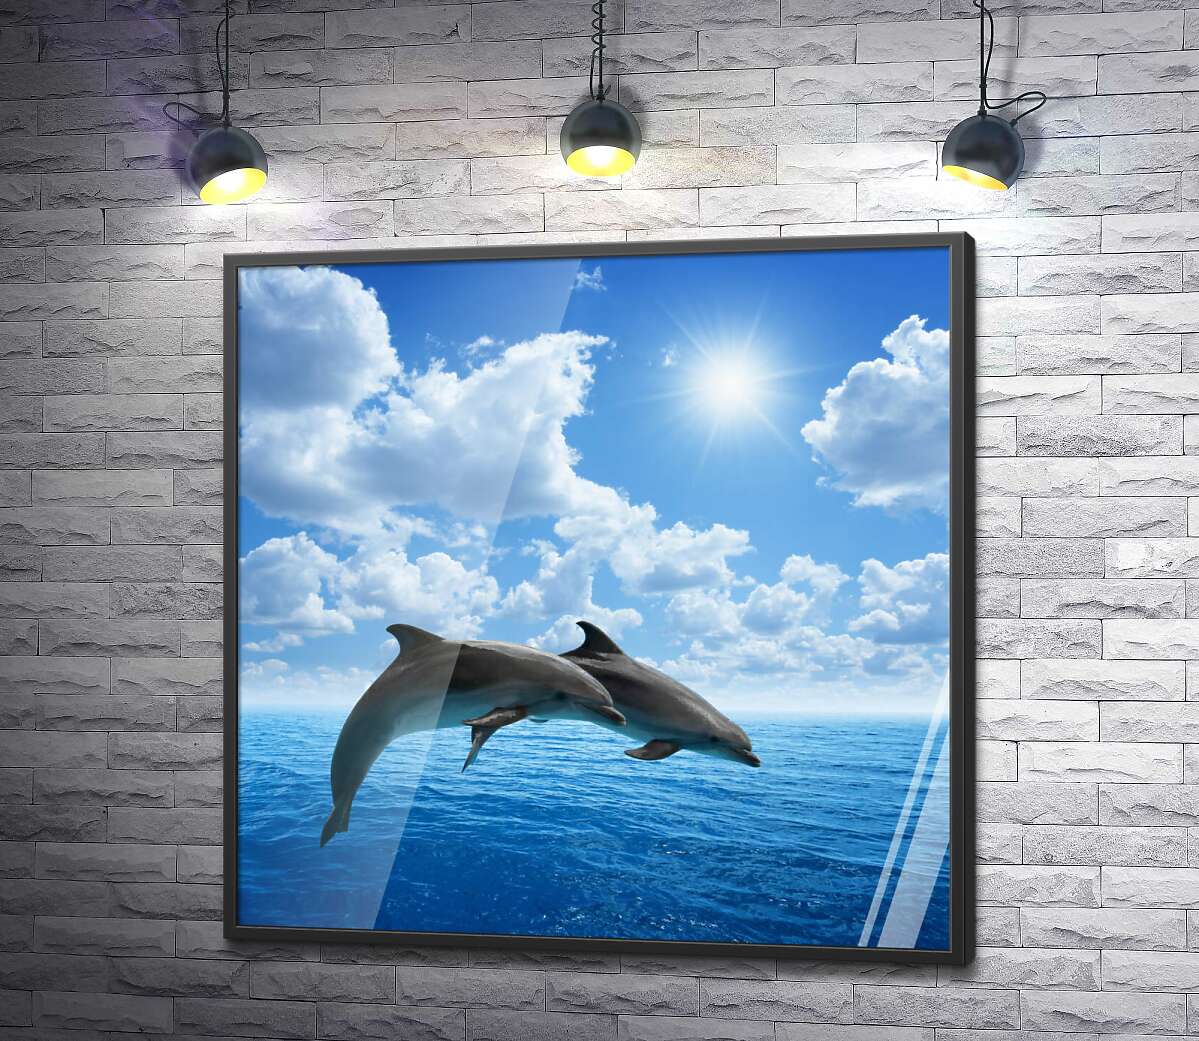 постер Пара дельфінів парить над поверхнею океану